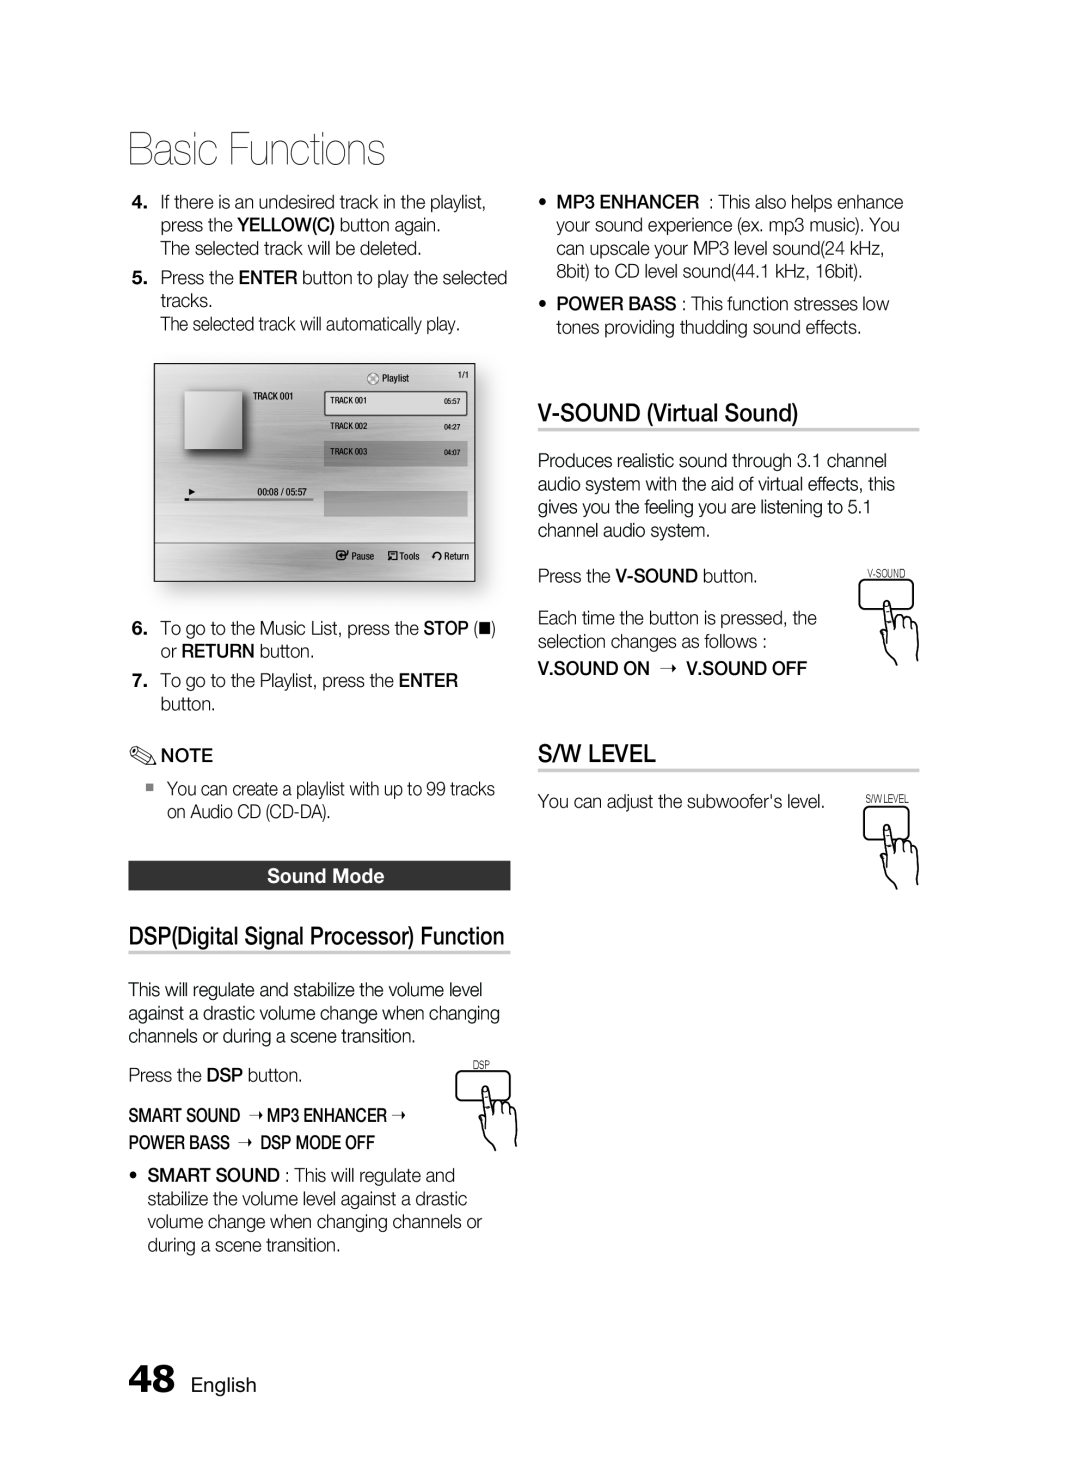 Samsung HT-C7300/EDC manual V-SOUND Virtual Sound, S/W Level, DSPDigital Signal Processor Function, Sound Mode, English 